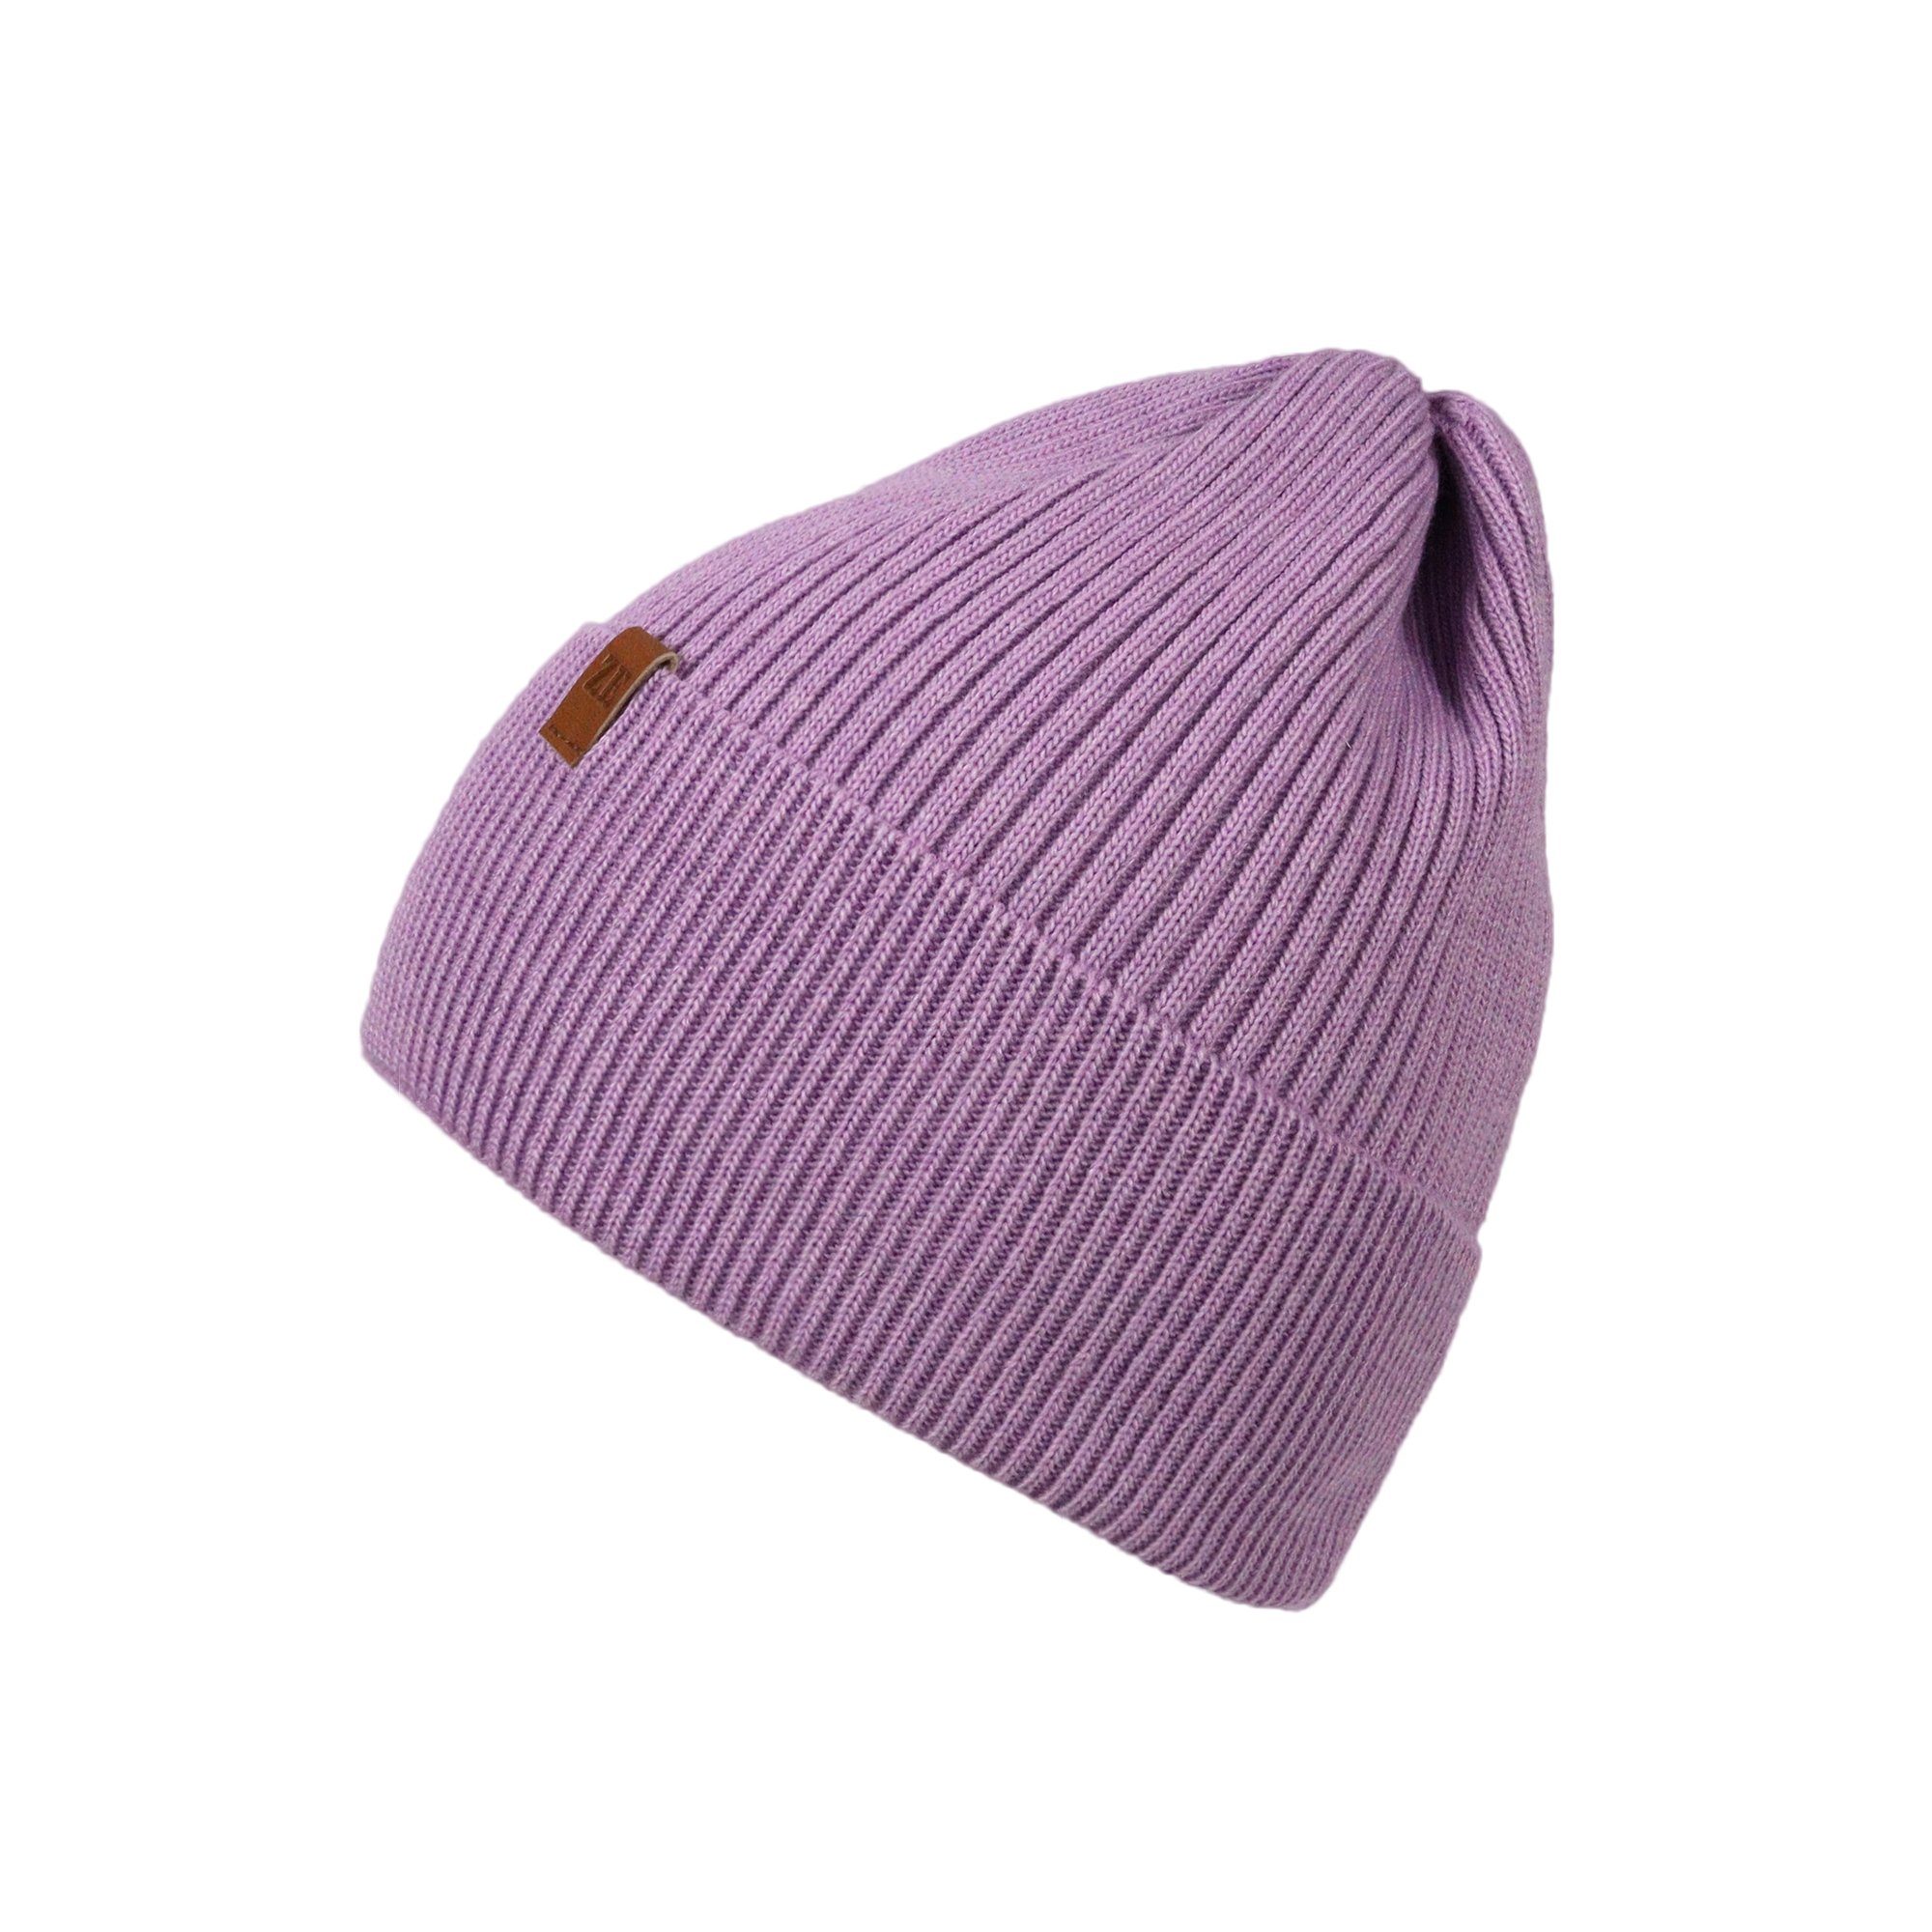 ZEBRO Strickmütze Mütze Kira lavendel